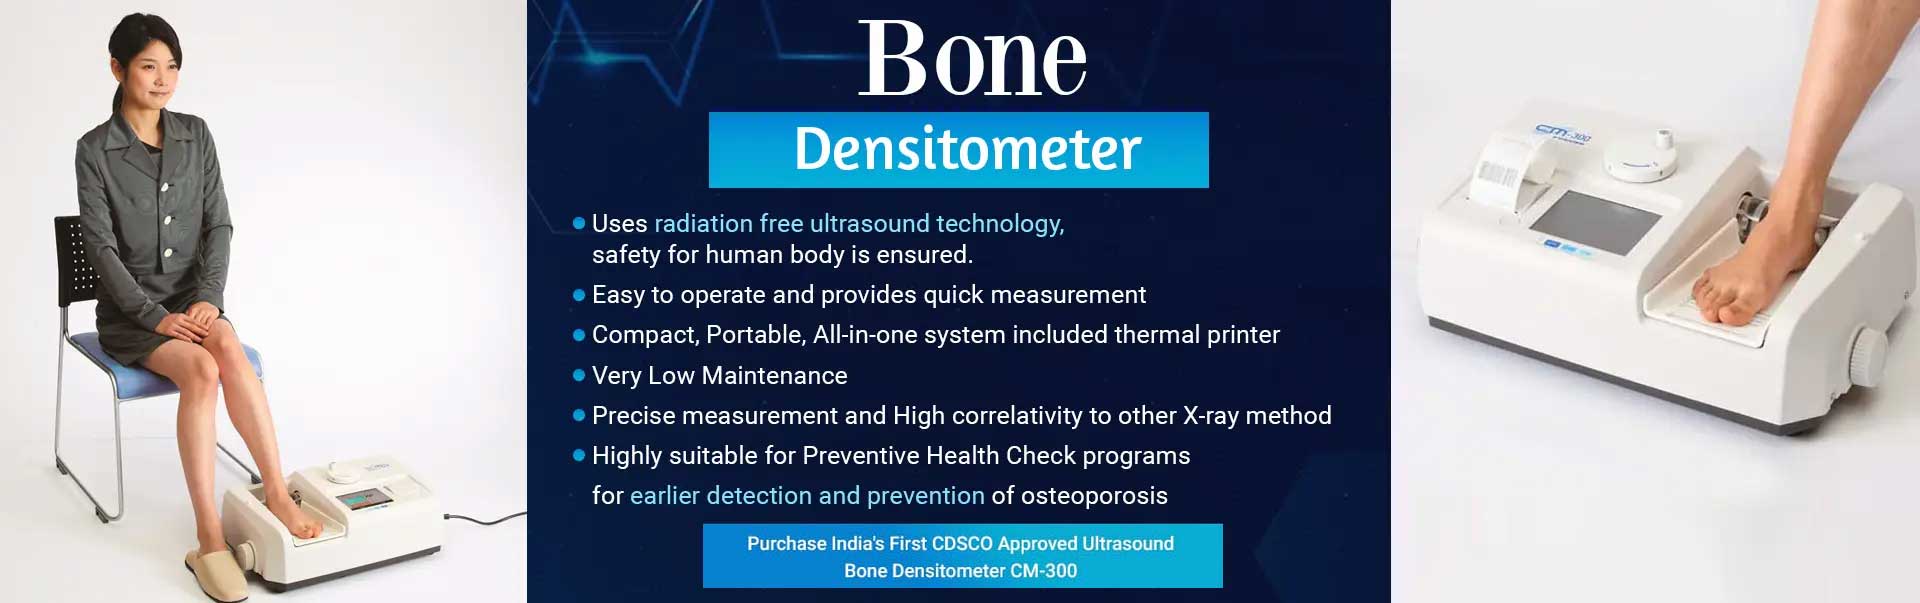 Bone Densitometer Manufacturers in Gorakhpur